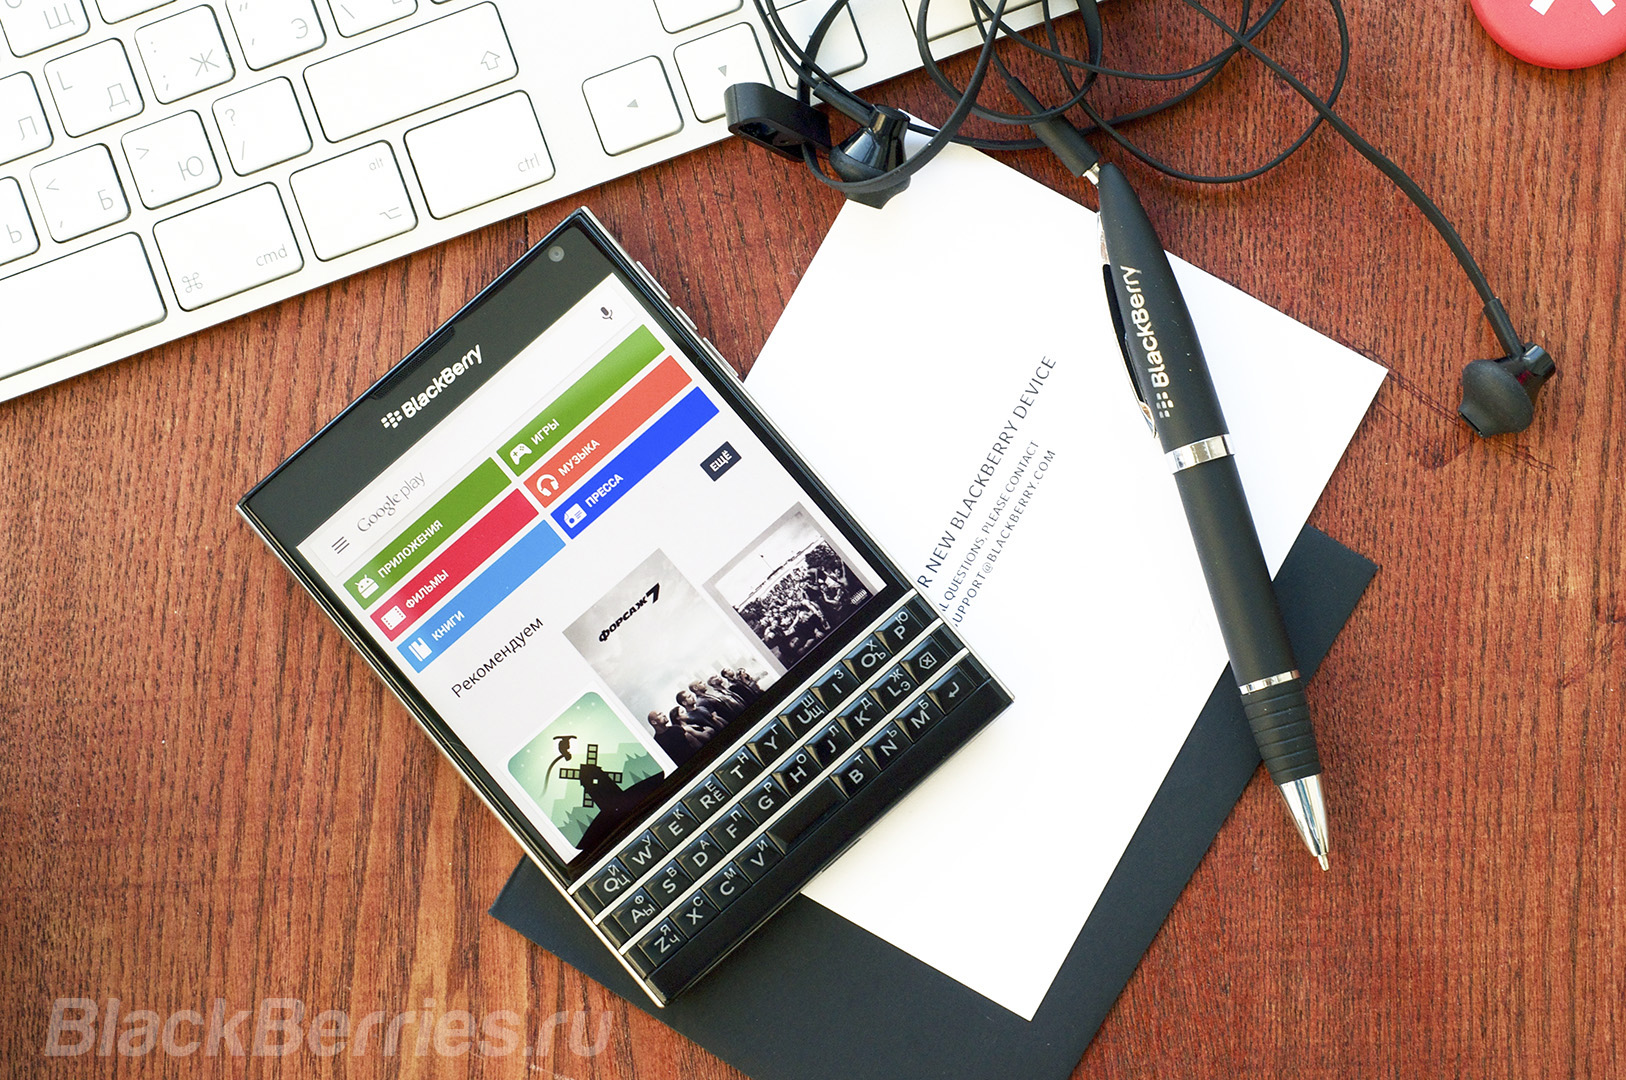 BlackBerry-Passport-Review-2016-33-1